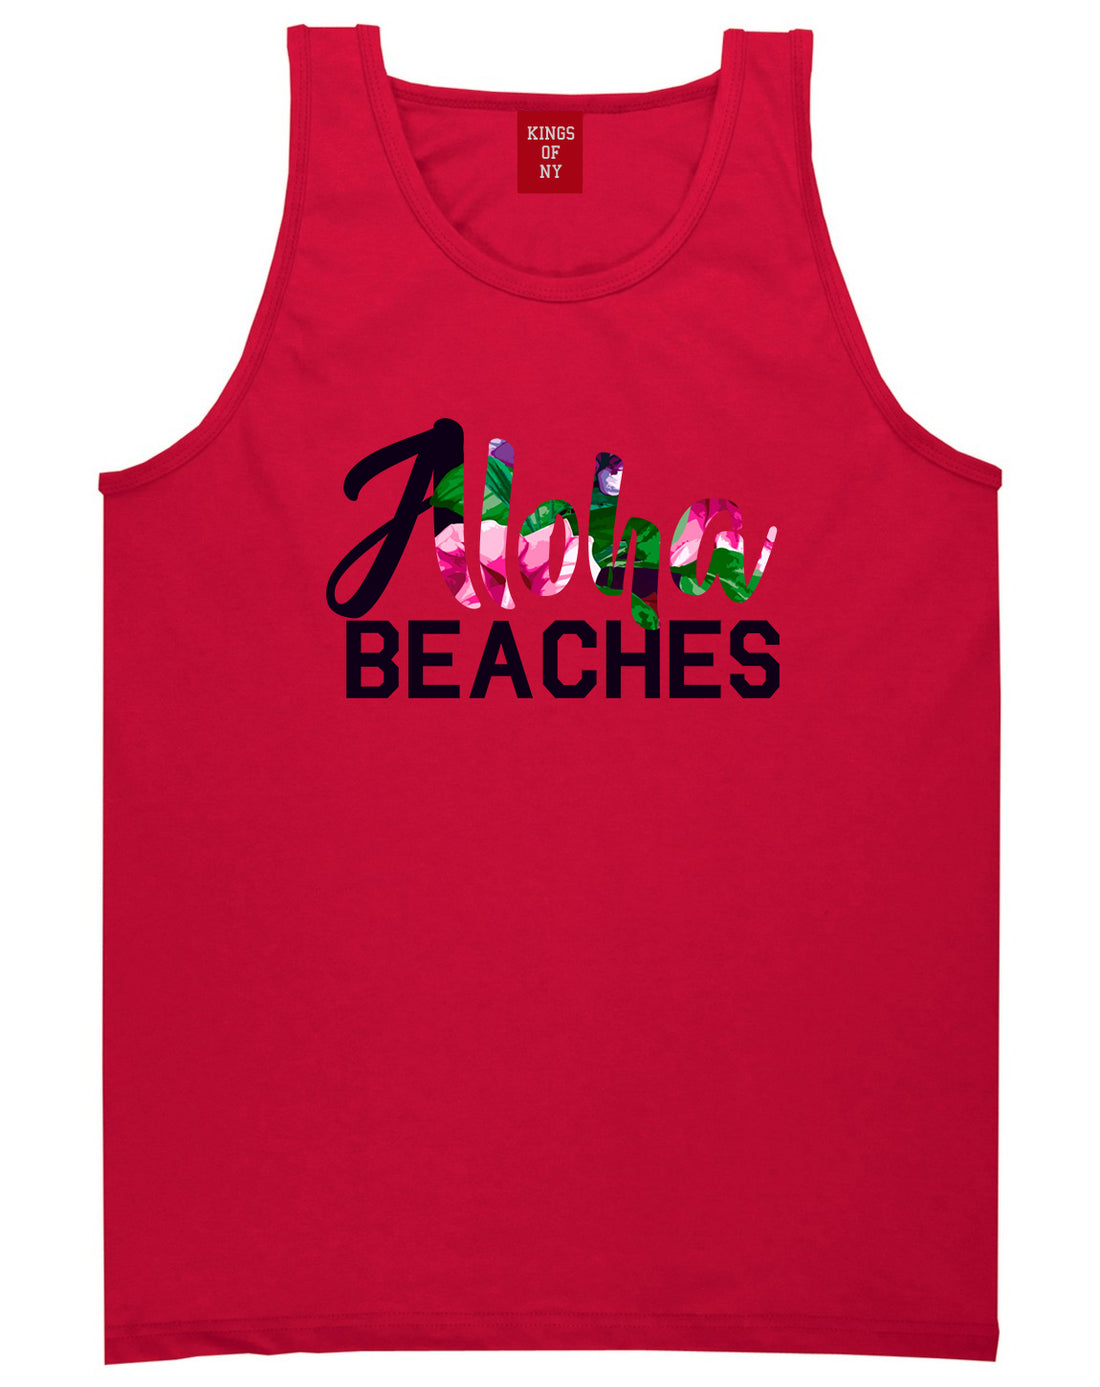 Aloha Beaches Red Tank Top Shirt by Kings Of NY